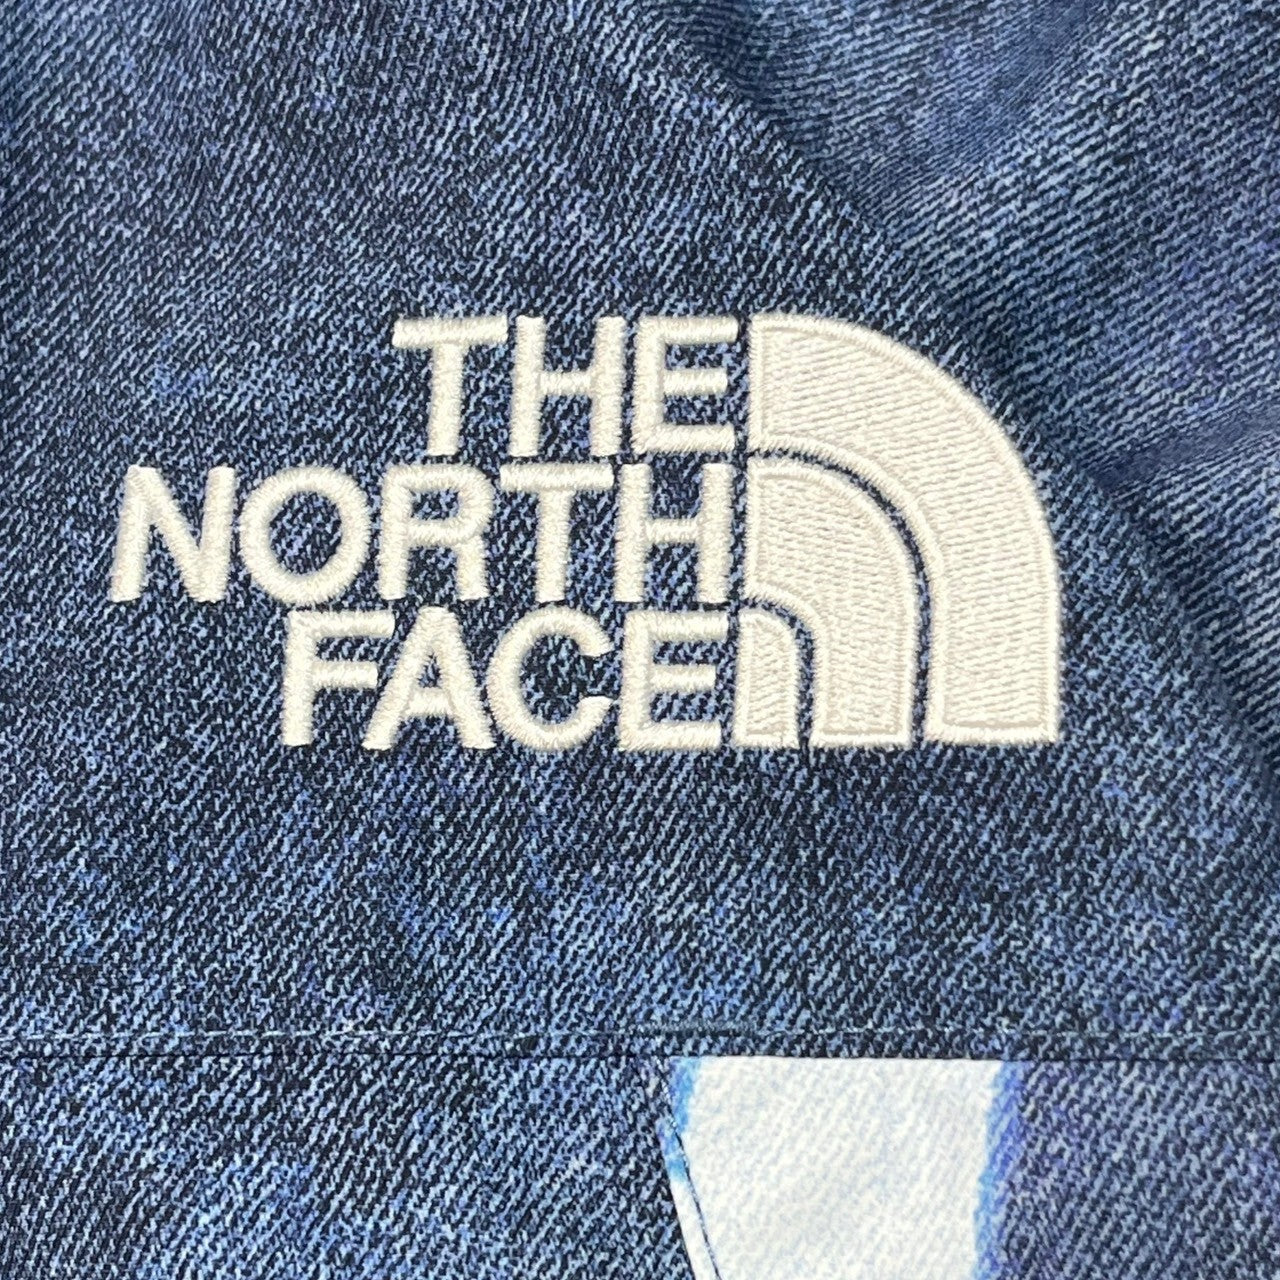 SUPREME×THE NORTH FACE(シュプリーム×ザノースフェイス) 21AW Bleached Denim Print Mountain Jacket ブリーチド デニム マウンテン ジャケット マウンテンパーカー NP52100I XL スカイブルー